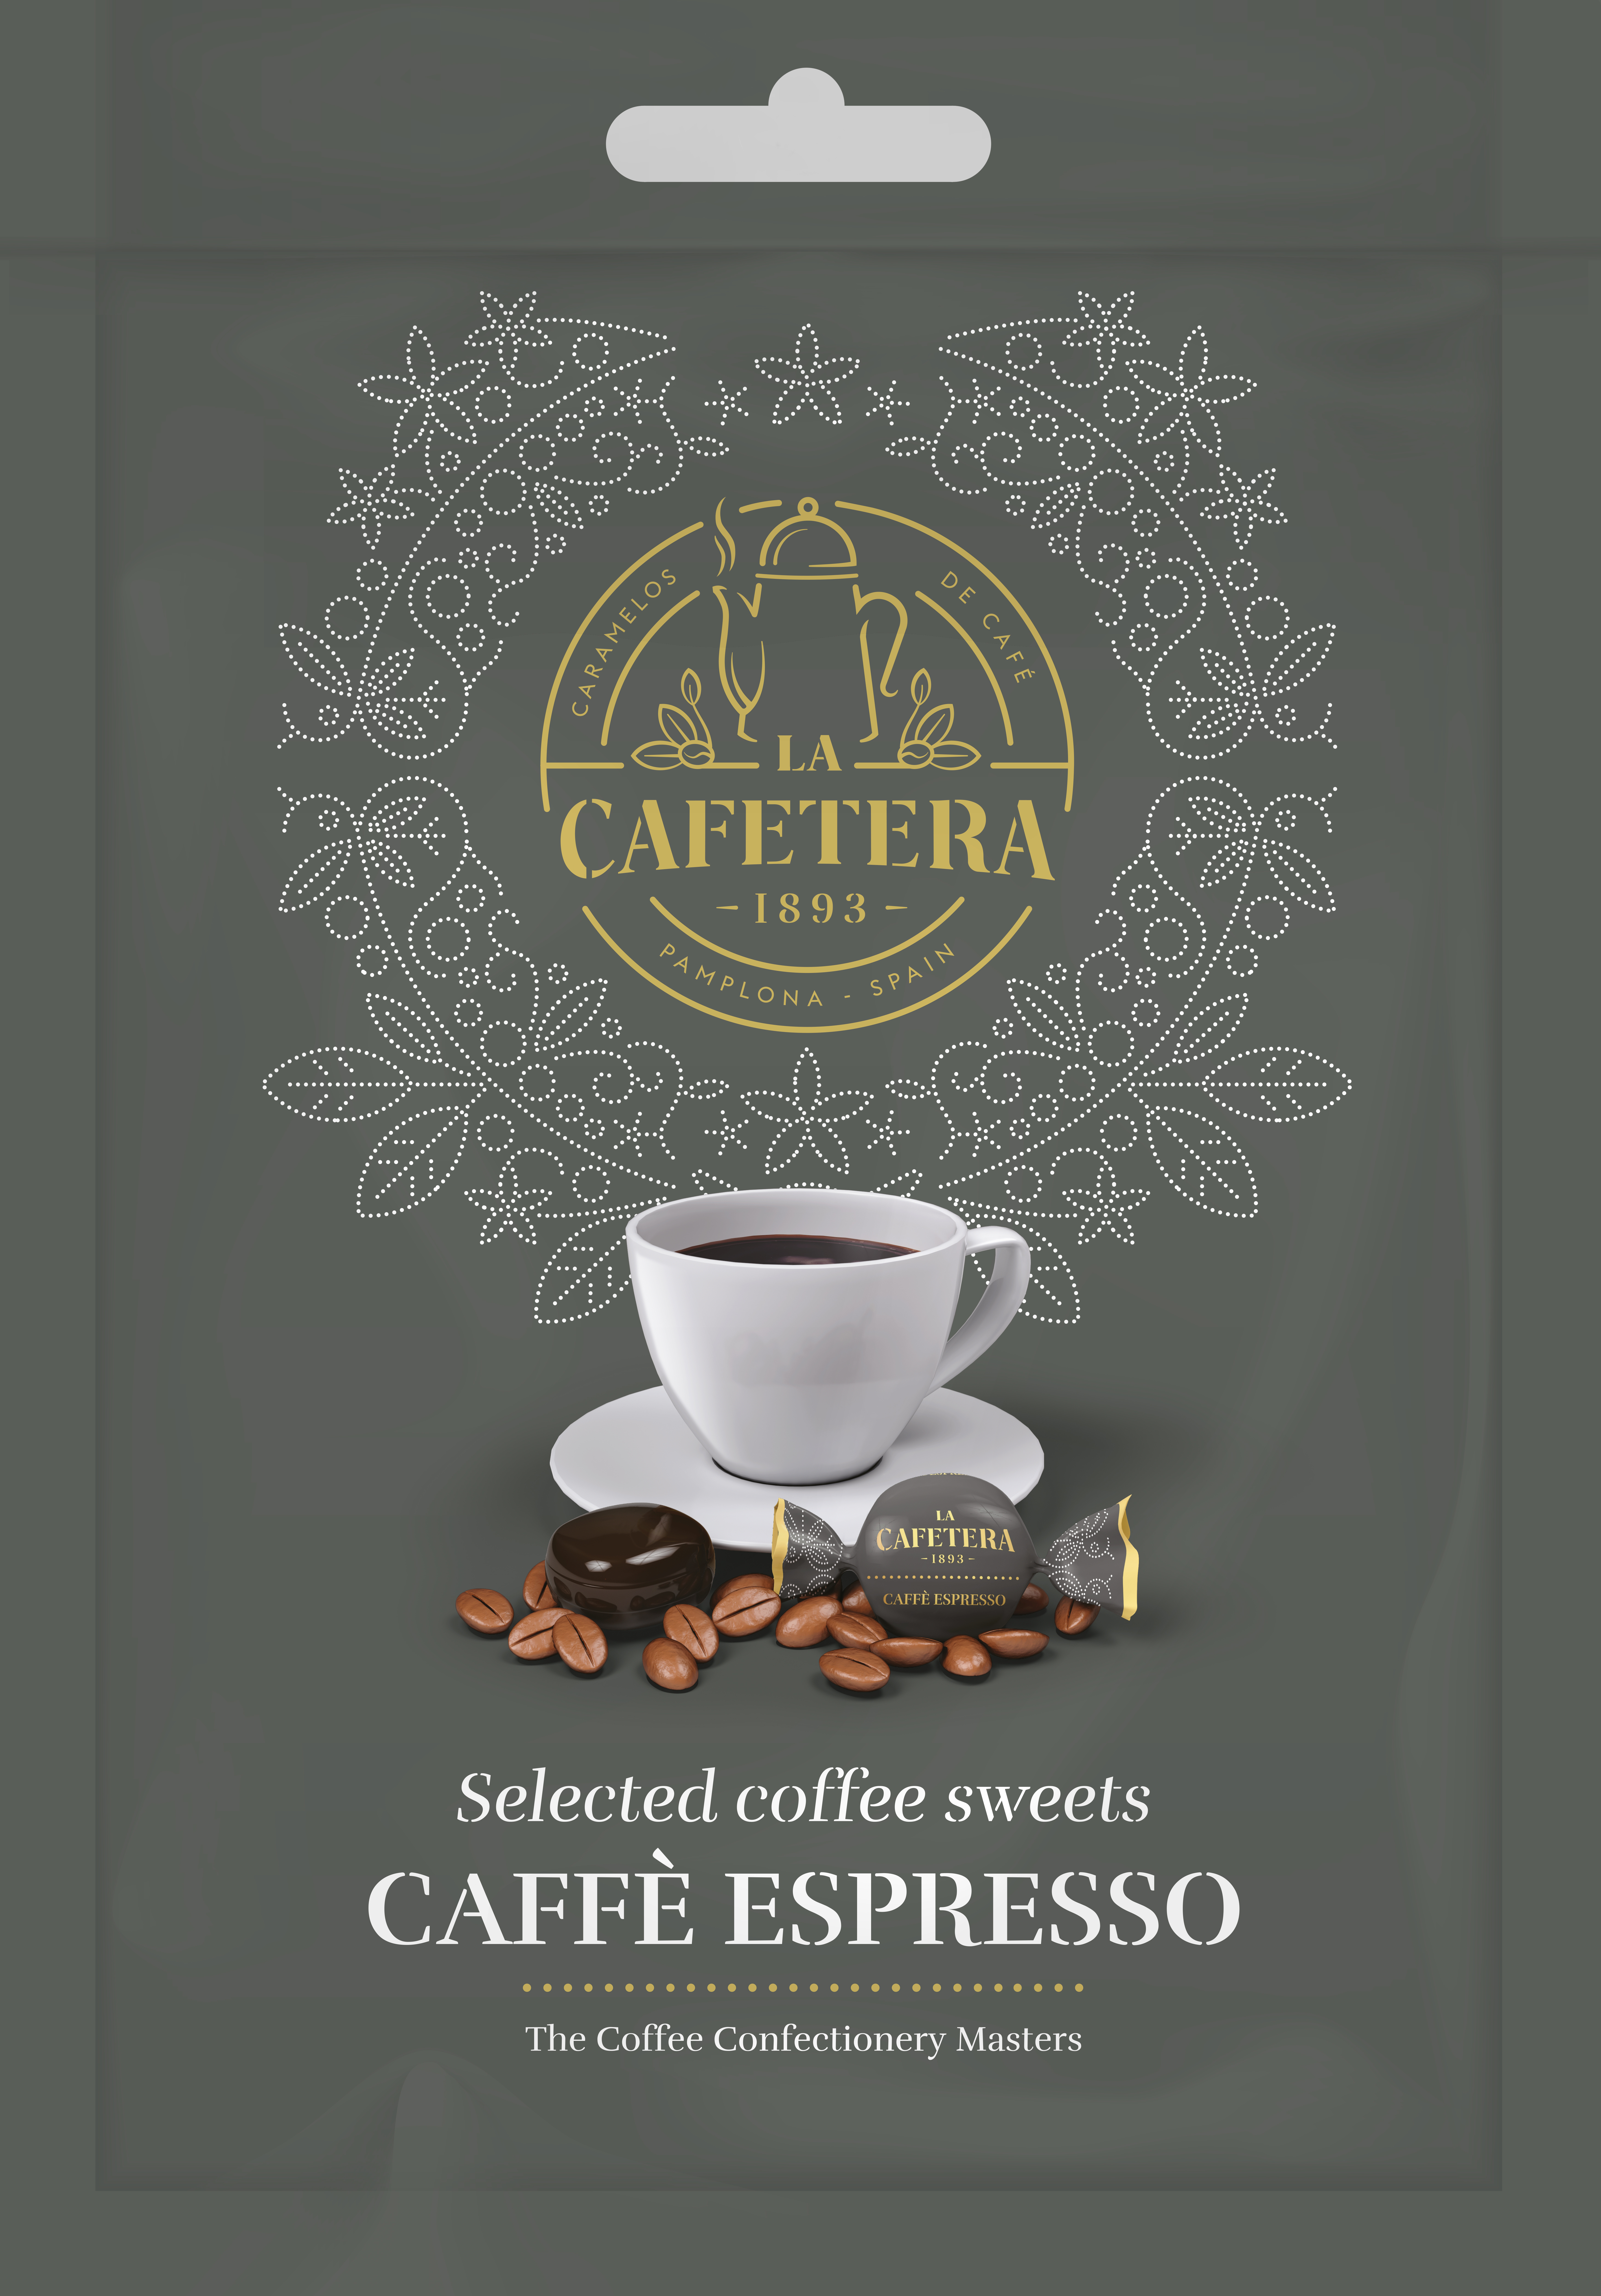 Bomboane - Caffe Espresso | La Cafetera